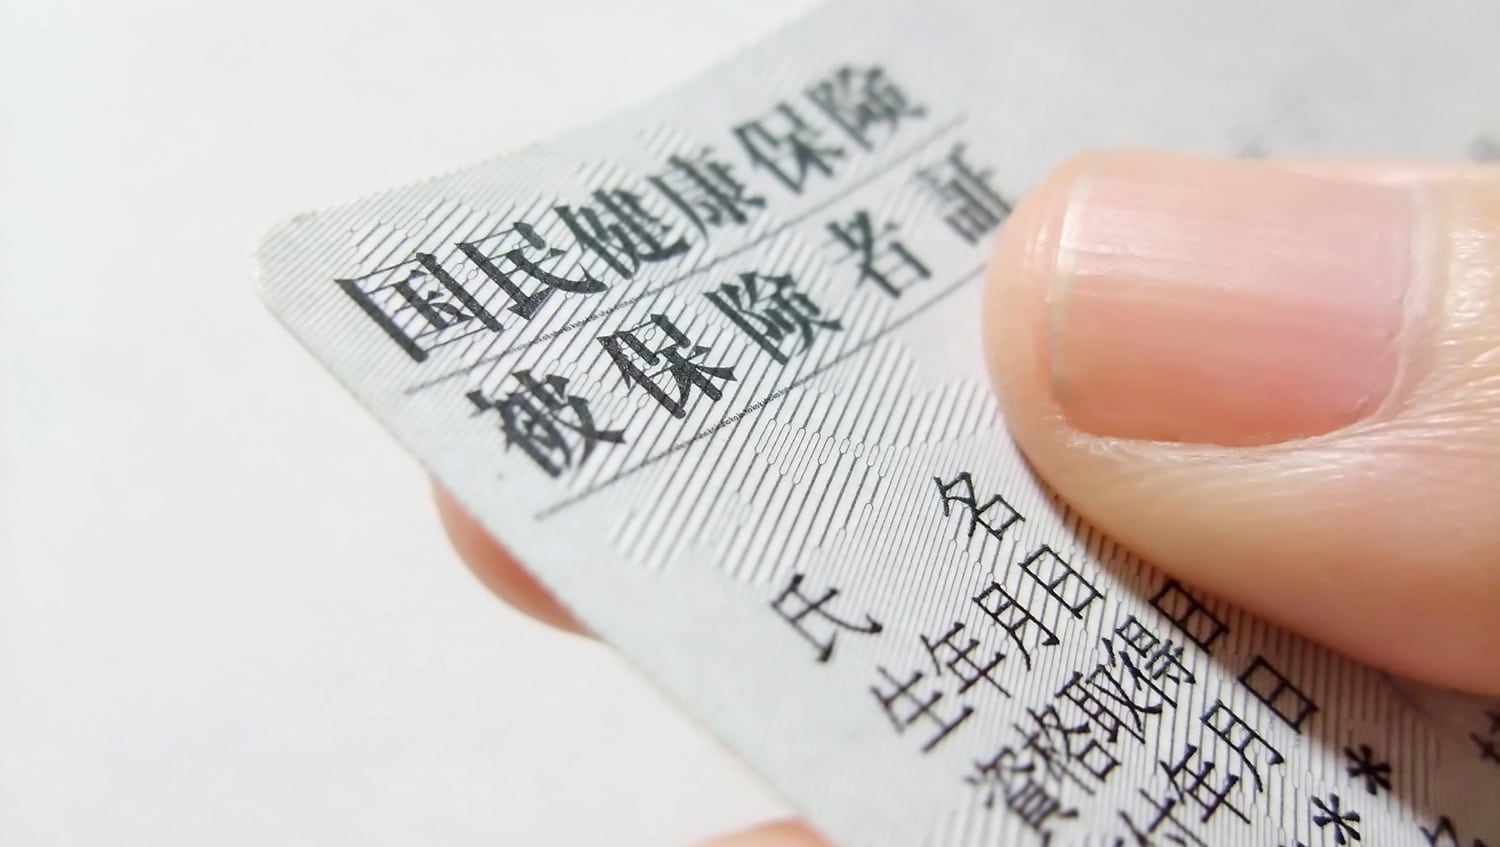 Japanese National Health Insurance Card